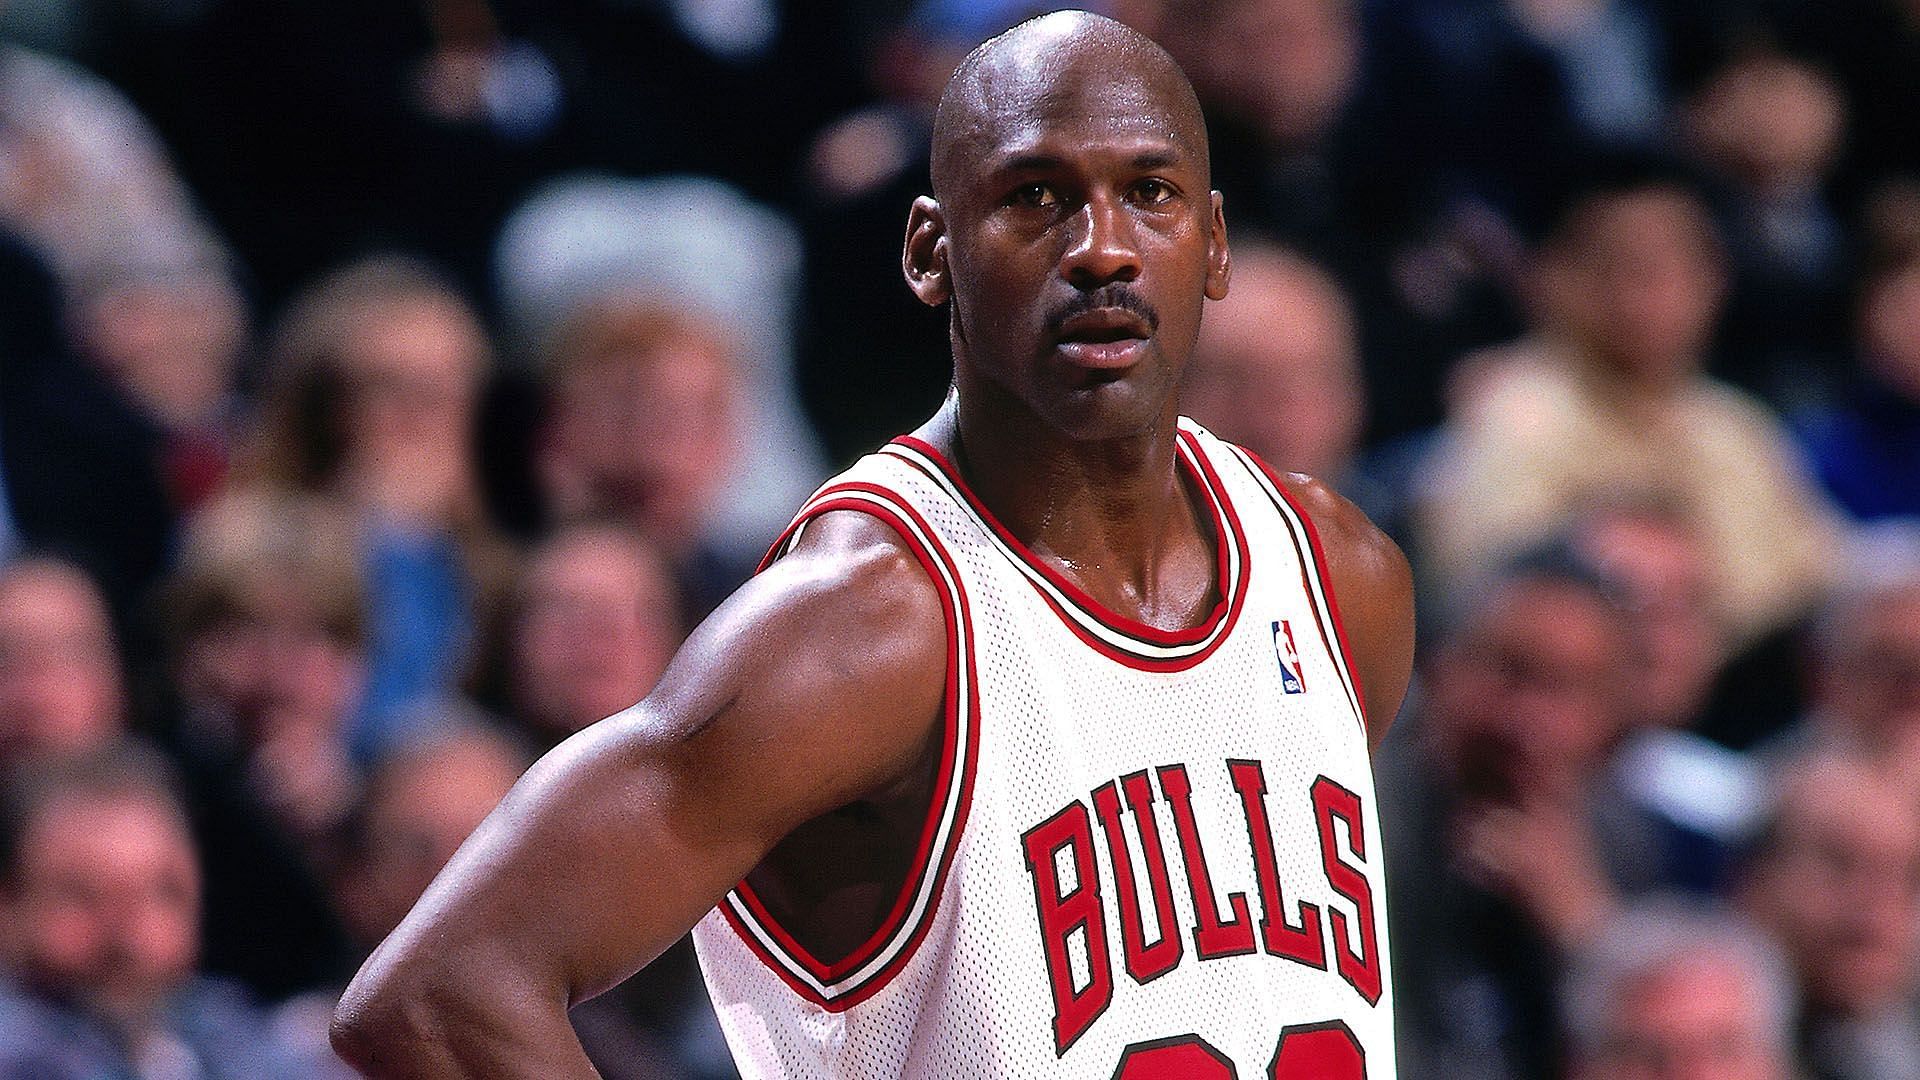 Chicago Bulls legend Michael Jordan